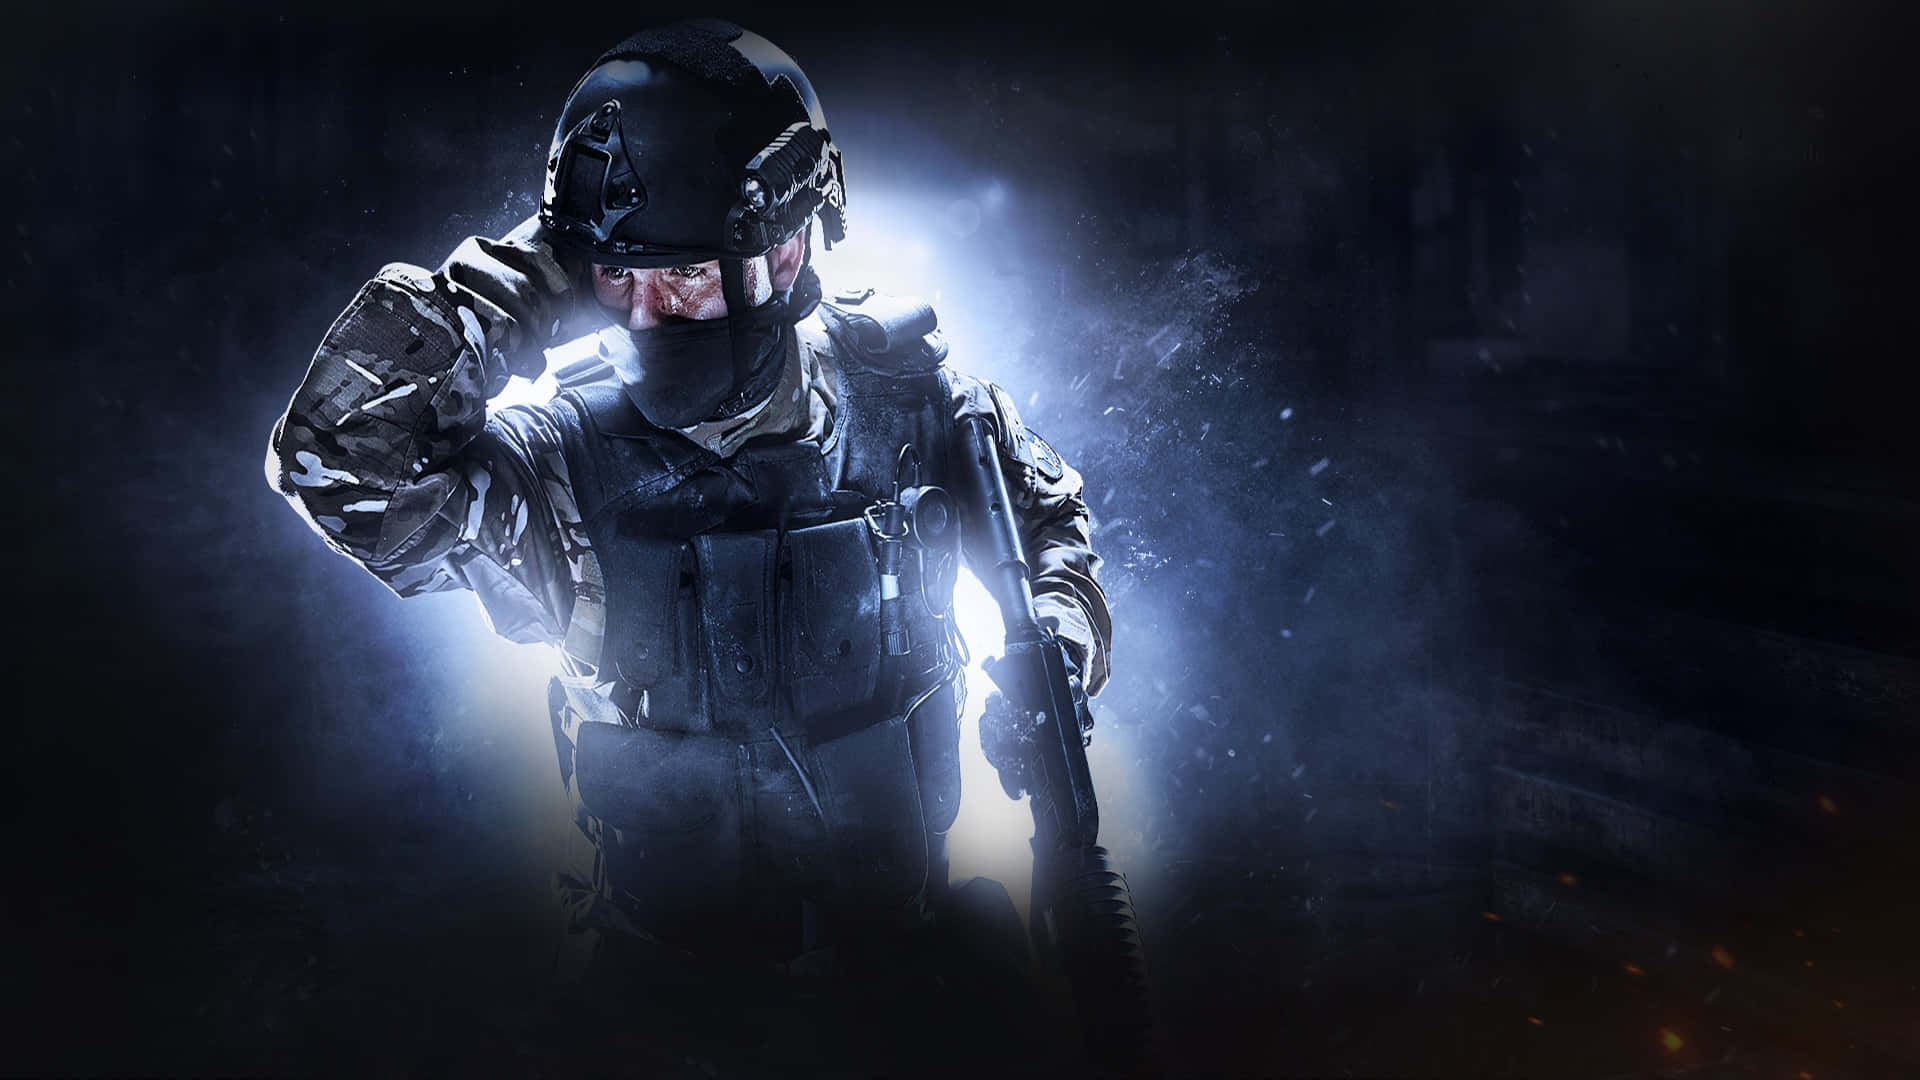 Lysandemilitär Soldat 1080p Counter Strike Global Offensive Bakgrundsbild.